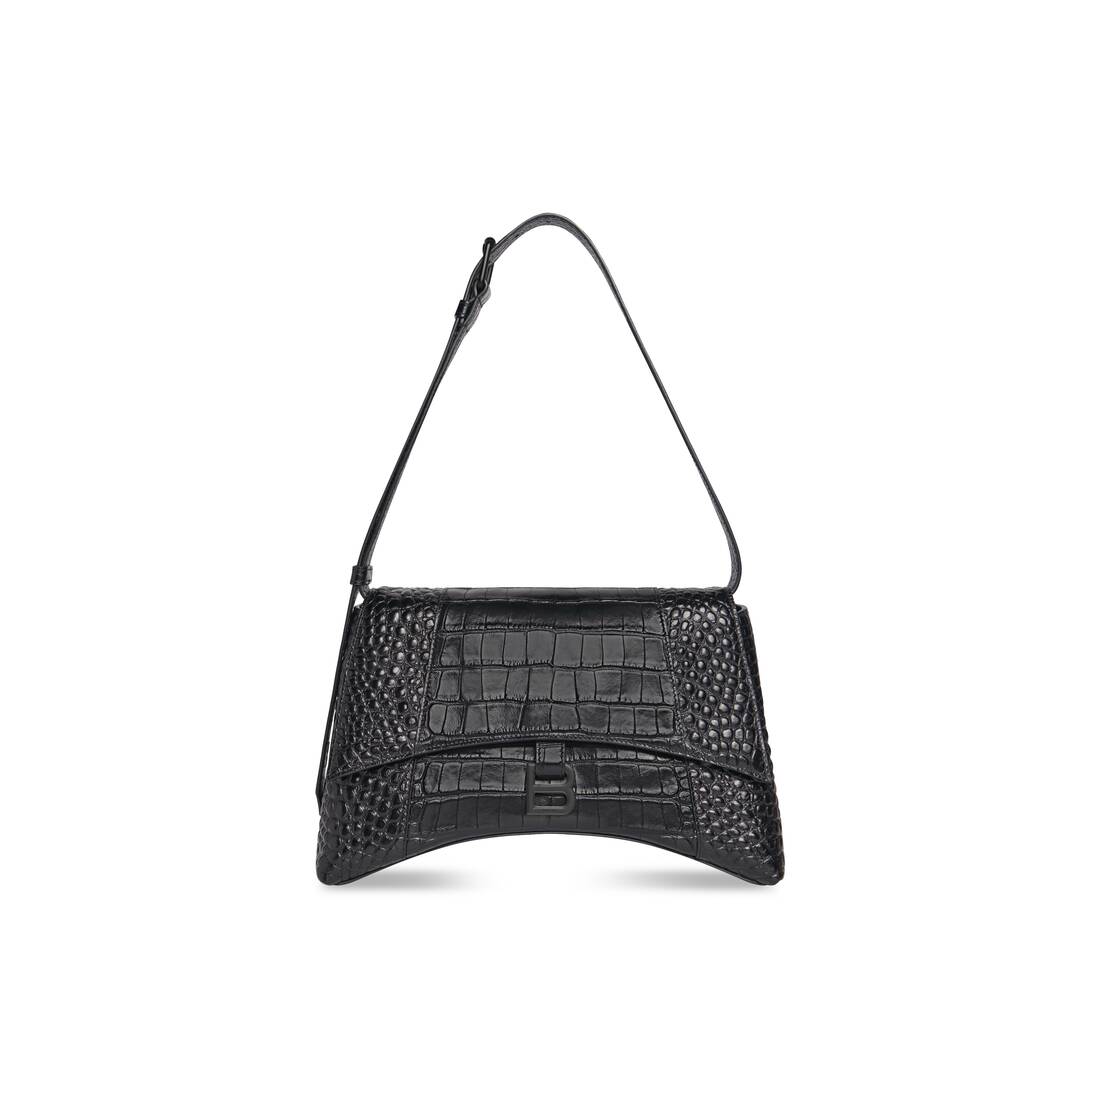 BALENCIAGA Crocodile Embossed Leather Bag for Women